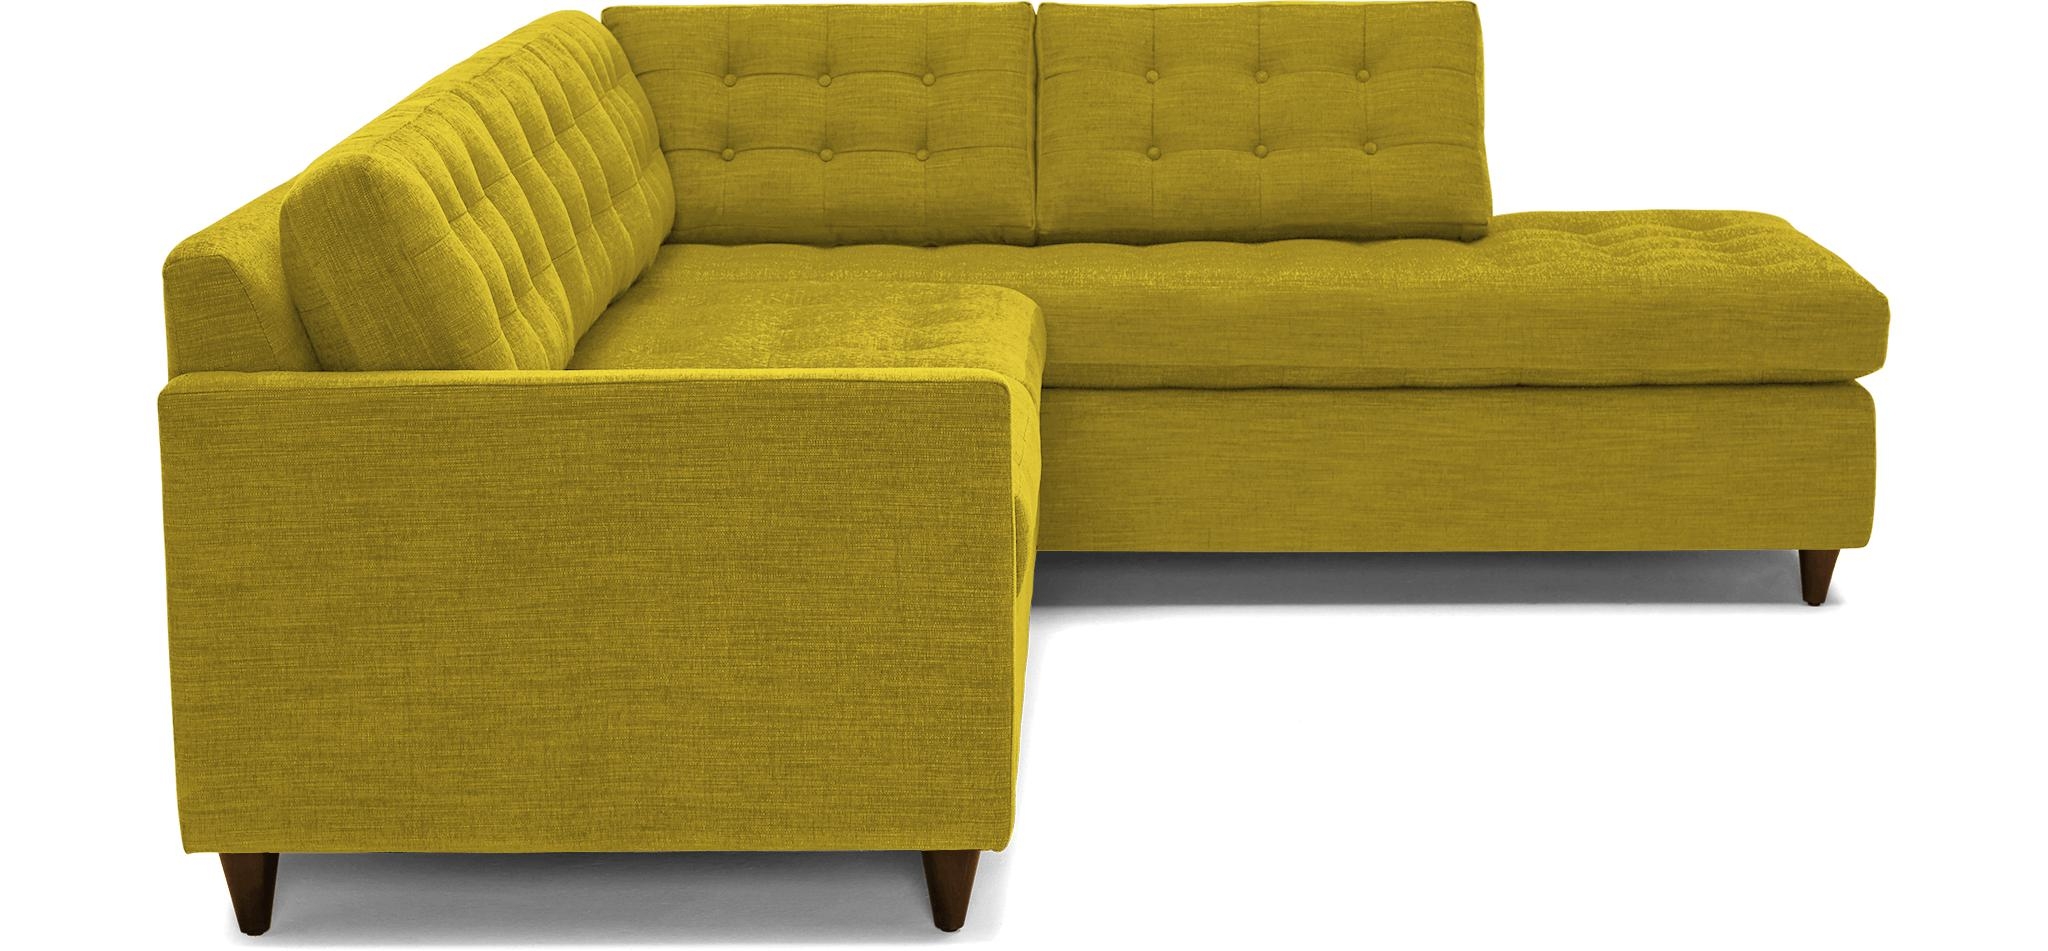 Yellow Eliot Mid Century Modern Bumper Sleeper Sectional - Bloke Goldenrod - Mocha - Right  - Image 2